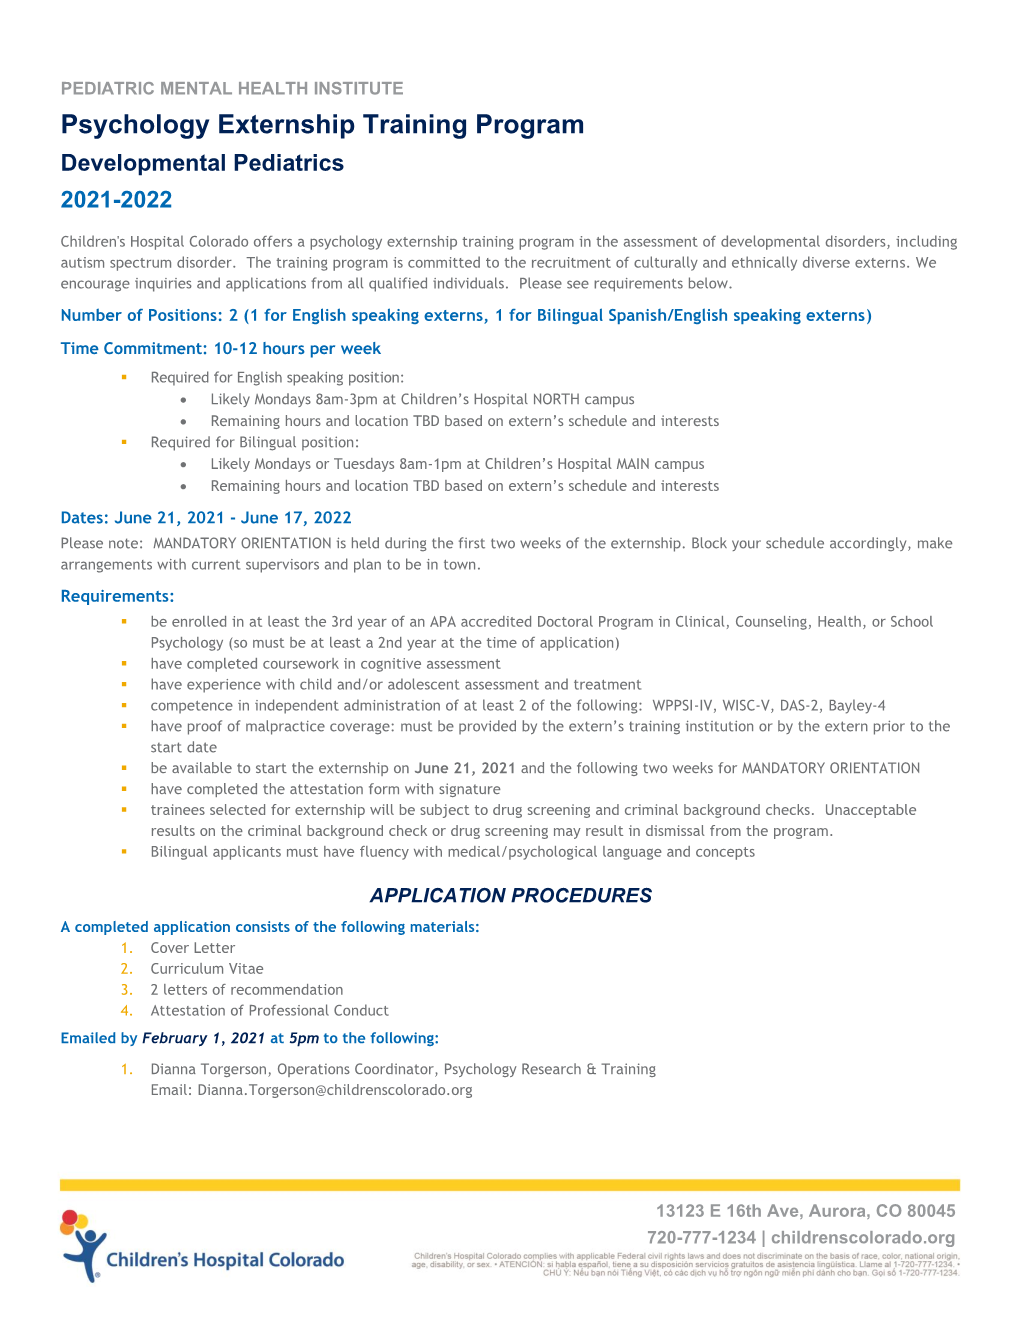 Psychology Externship Training Program Developmental Pediatrics 2021-2022